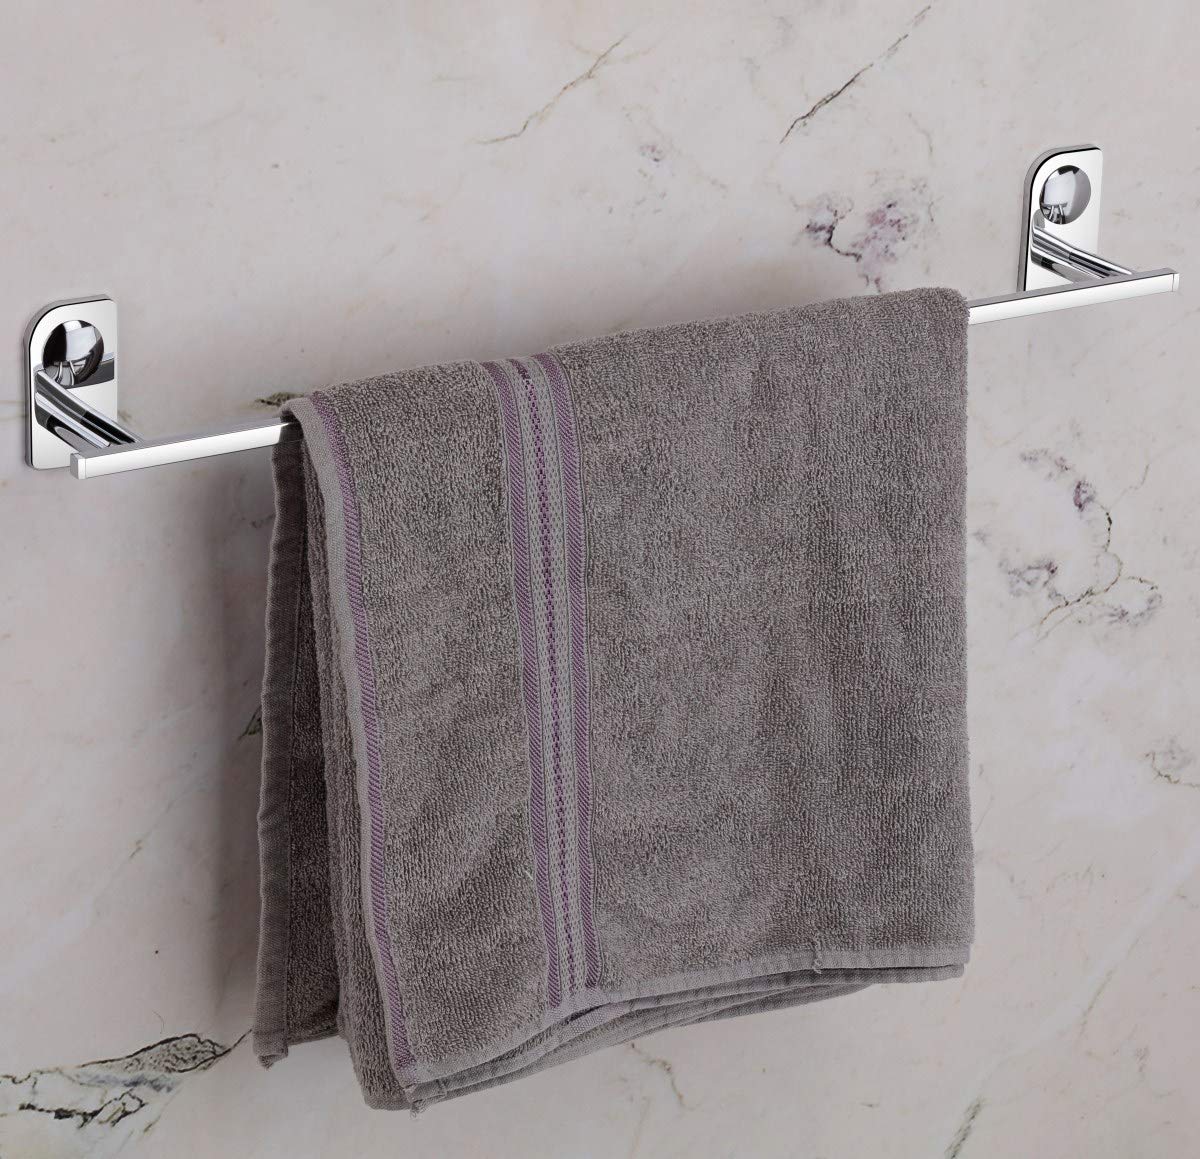 Plantex Dream Stainless Steel Towel Hanger for Bathroom/Towel Rod/Bar/Bathroom Accessories (24-inch/Chrome) - Pack of 2